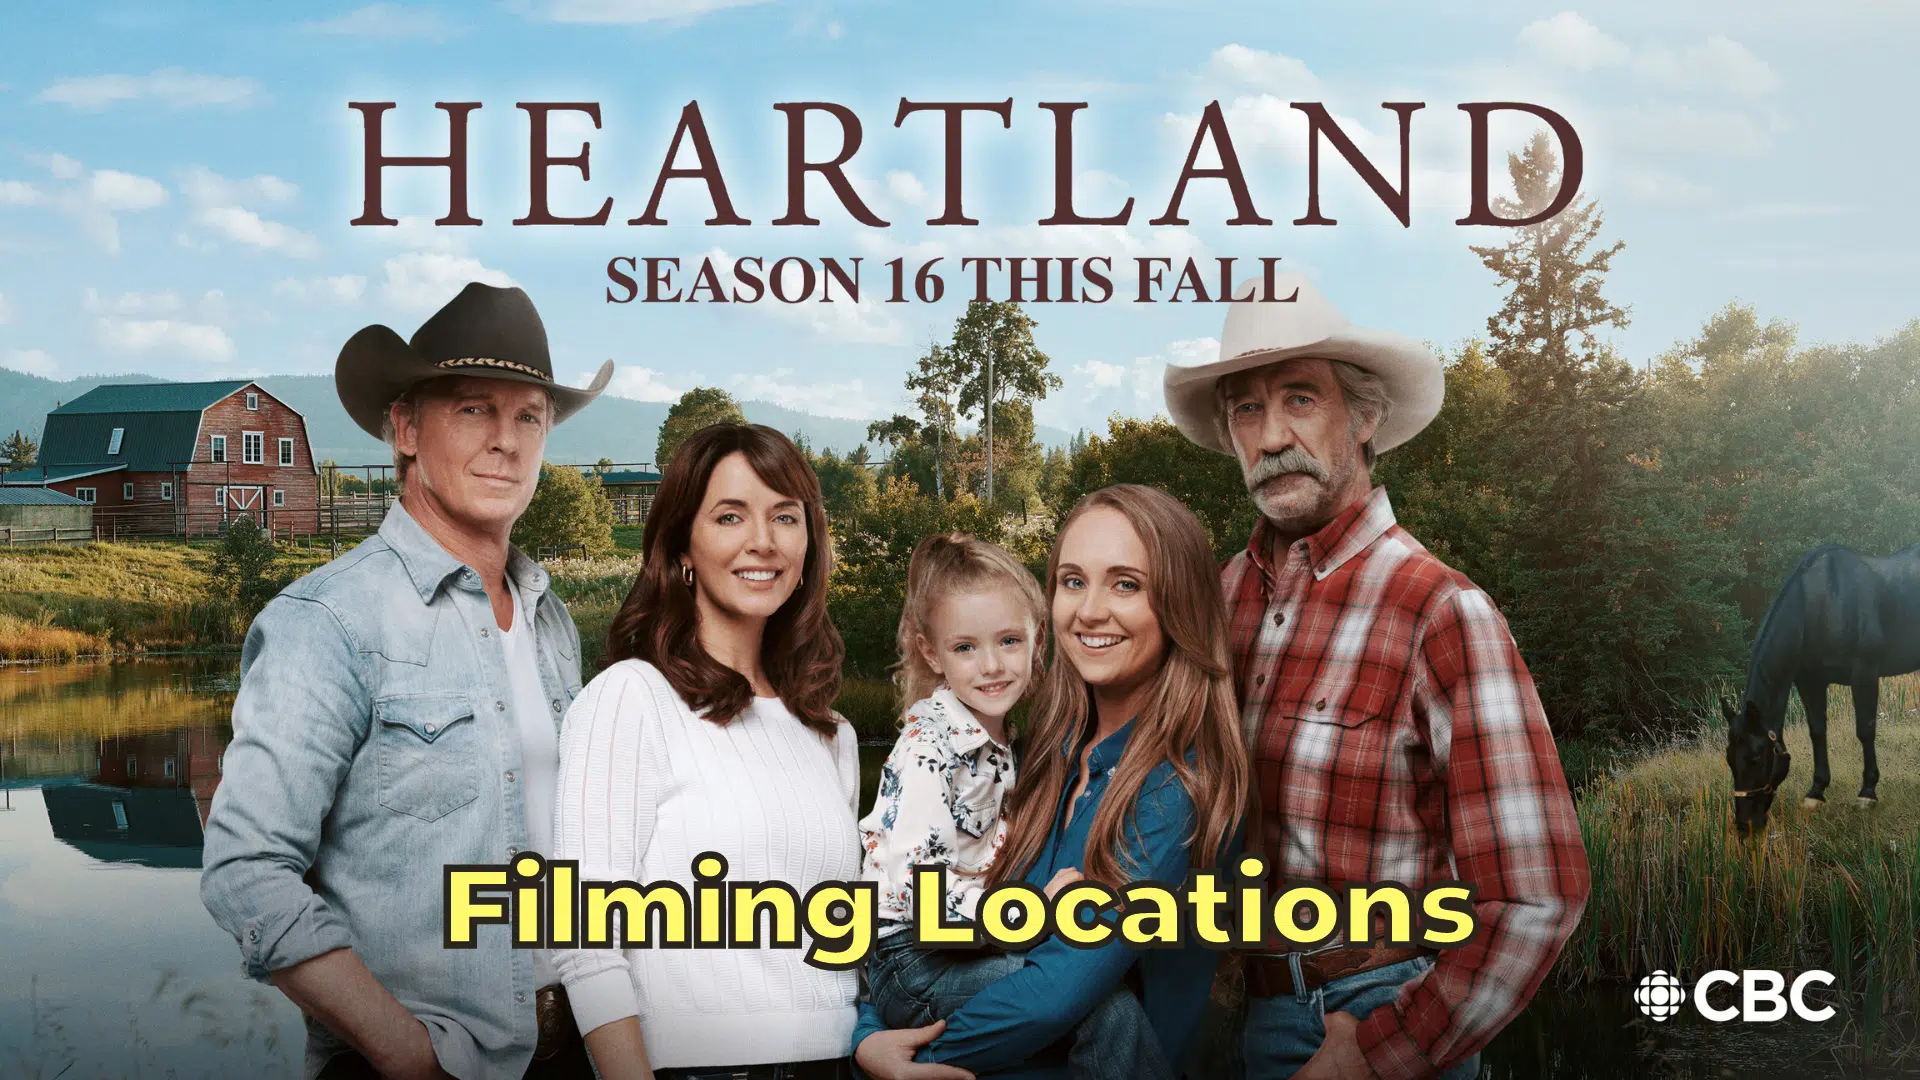 Heartland Season 16 Filming Locations